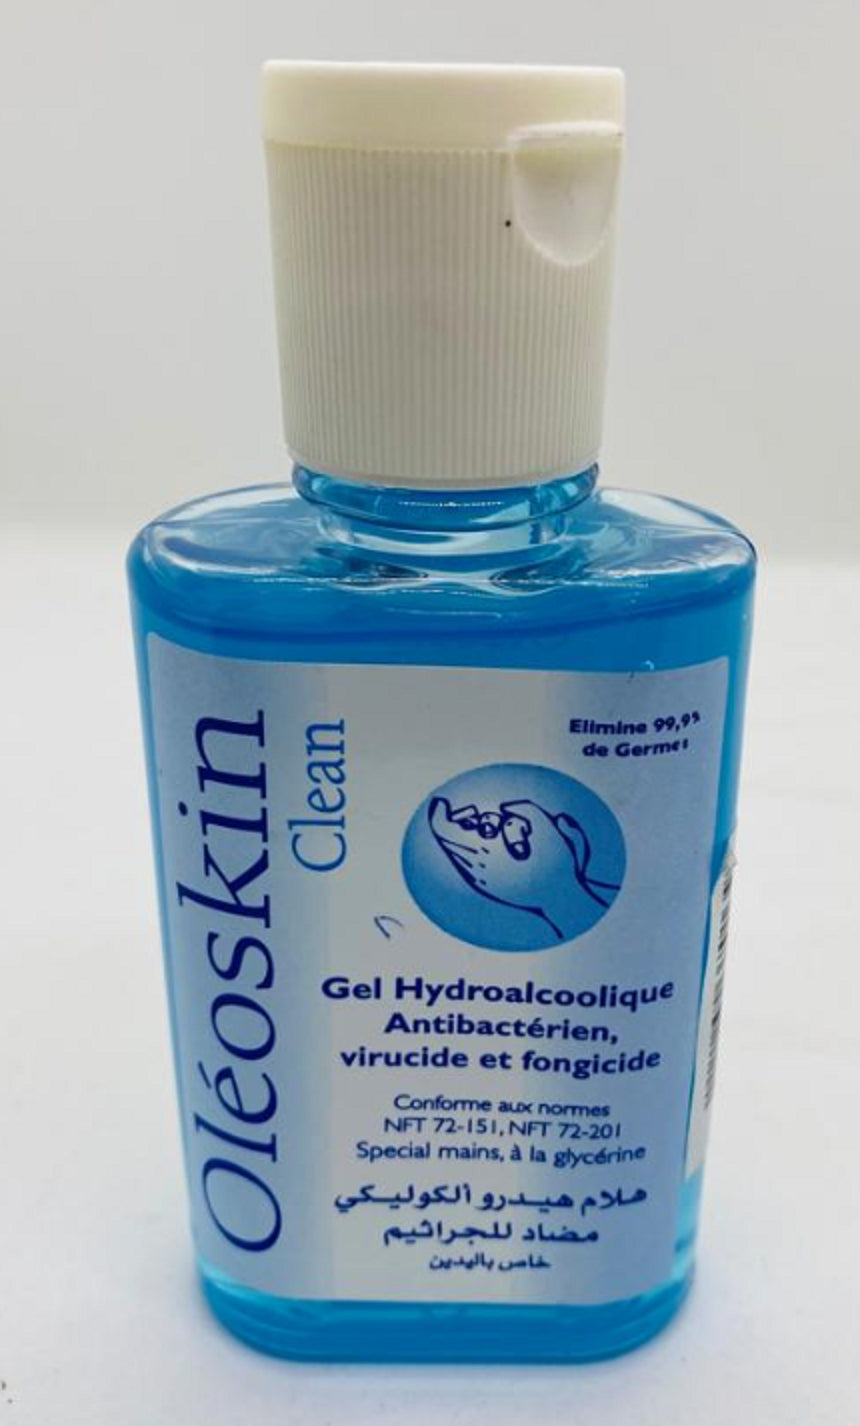 OLéoskin Clean Antibacterial Virucidal and Fungicidal Hydroalcoholic Gel 100ml